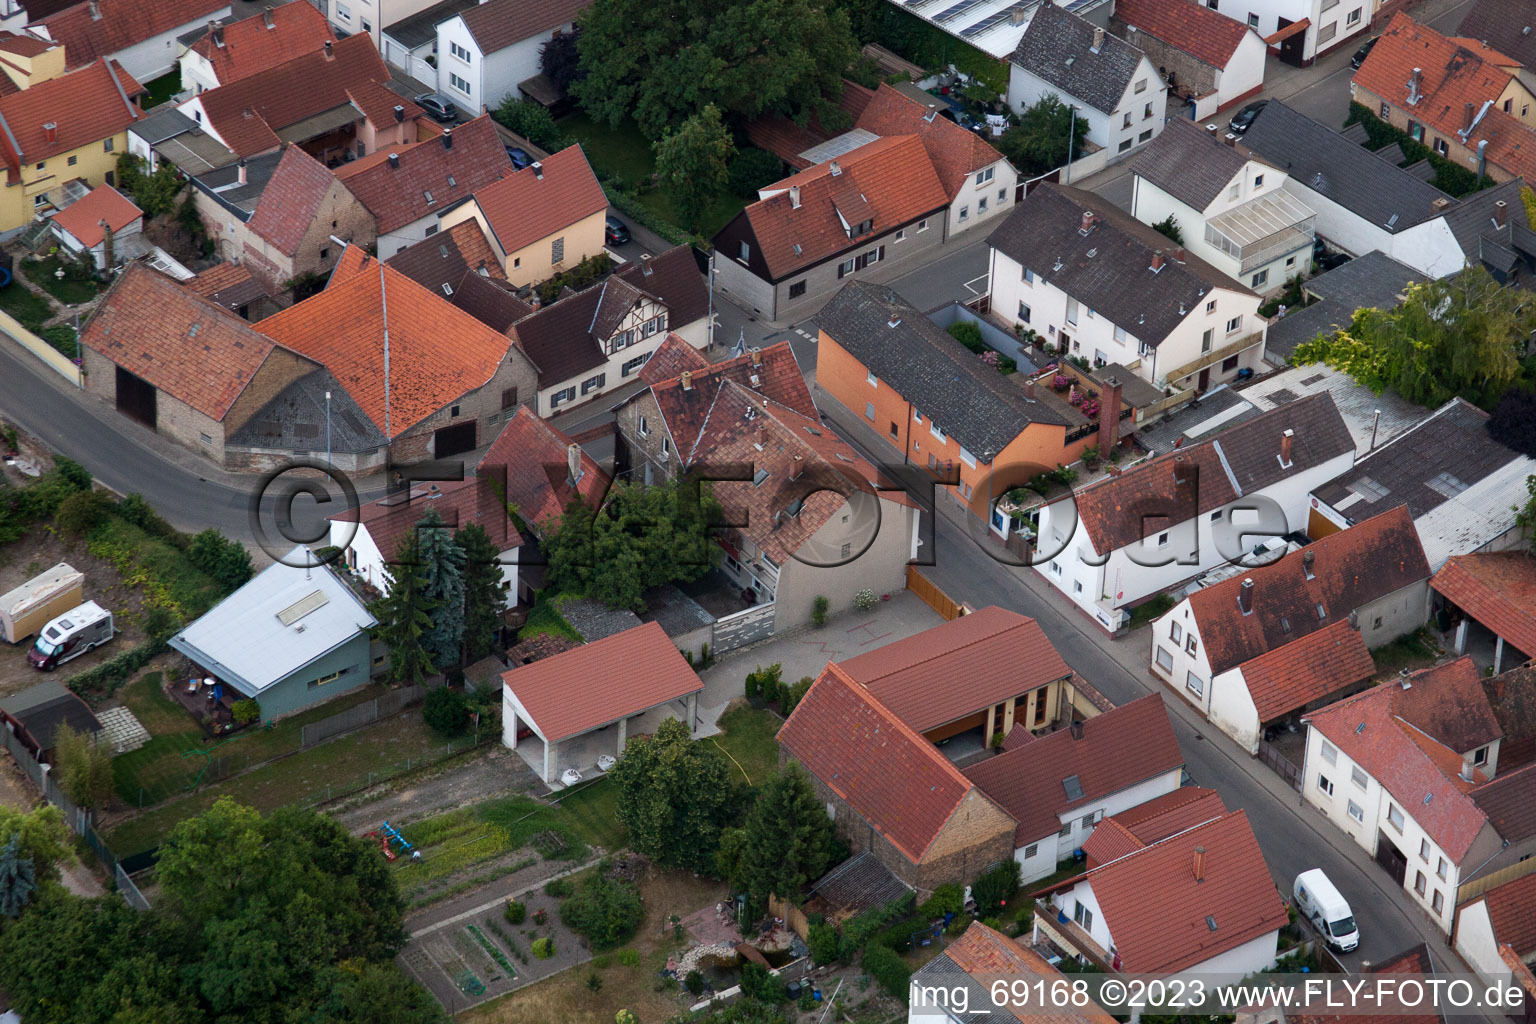 District Bobenheim in Bobenheim-Roxheim in the state Rhineland-Palatinate, Germany from above